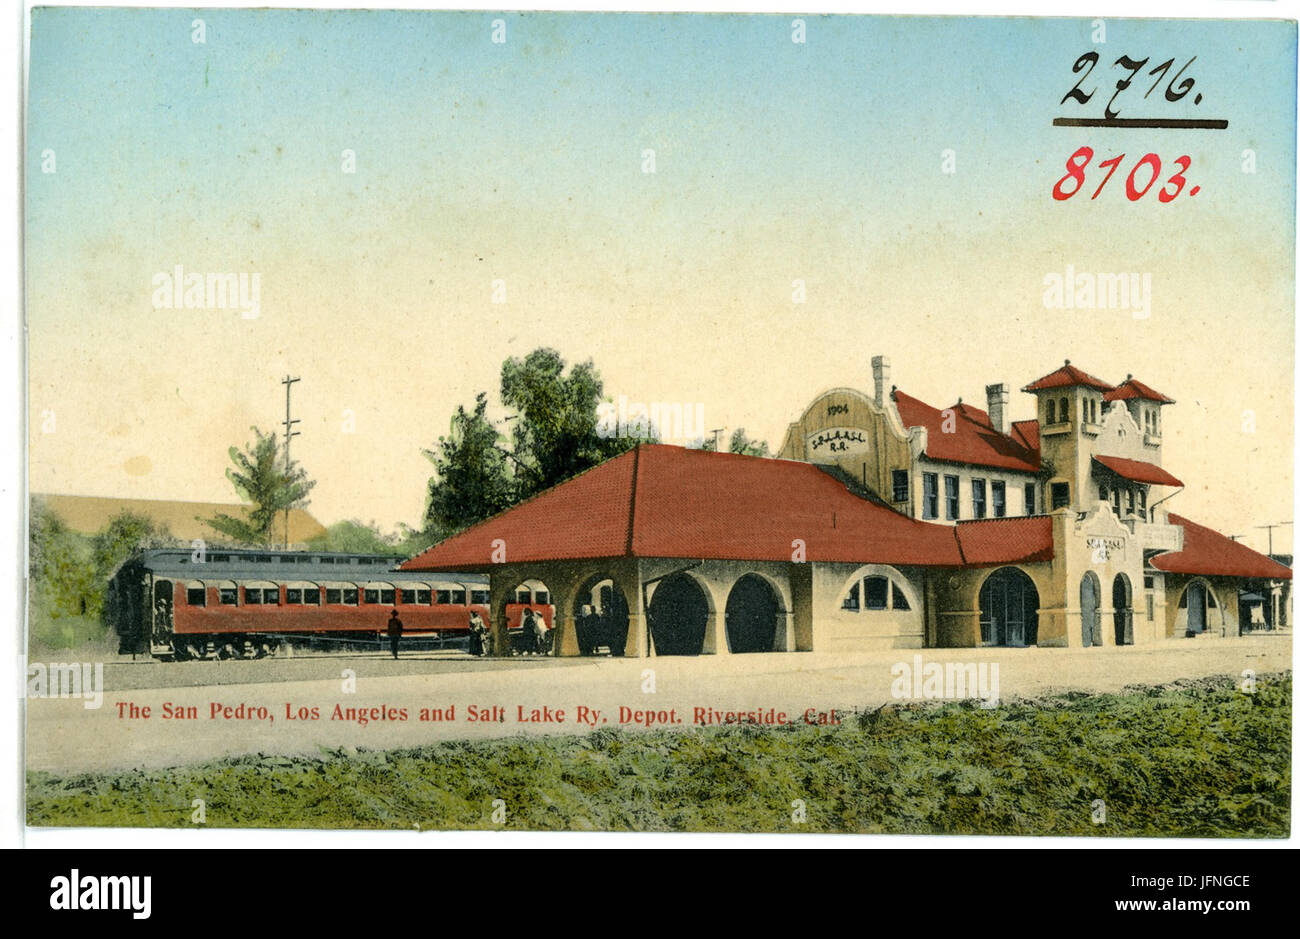 08103-Riverside, Cal-1906-Depot-Brück & Sohn Kunstverlag Stockfoto